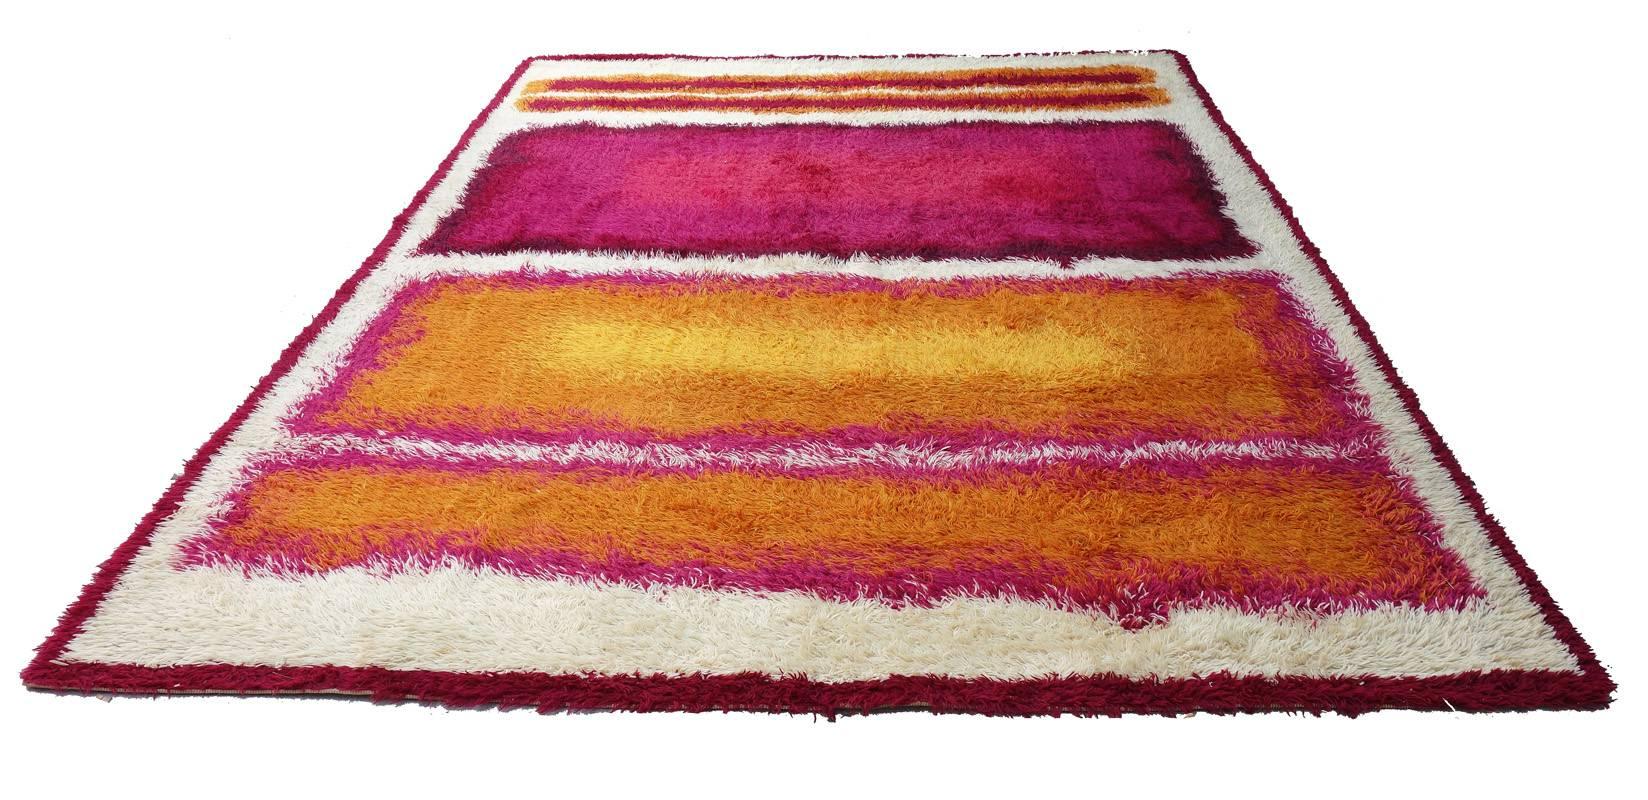 Mid-Century Mark Rothko inspired Shag Rya rug. Very large and fun room sized rug.